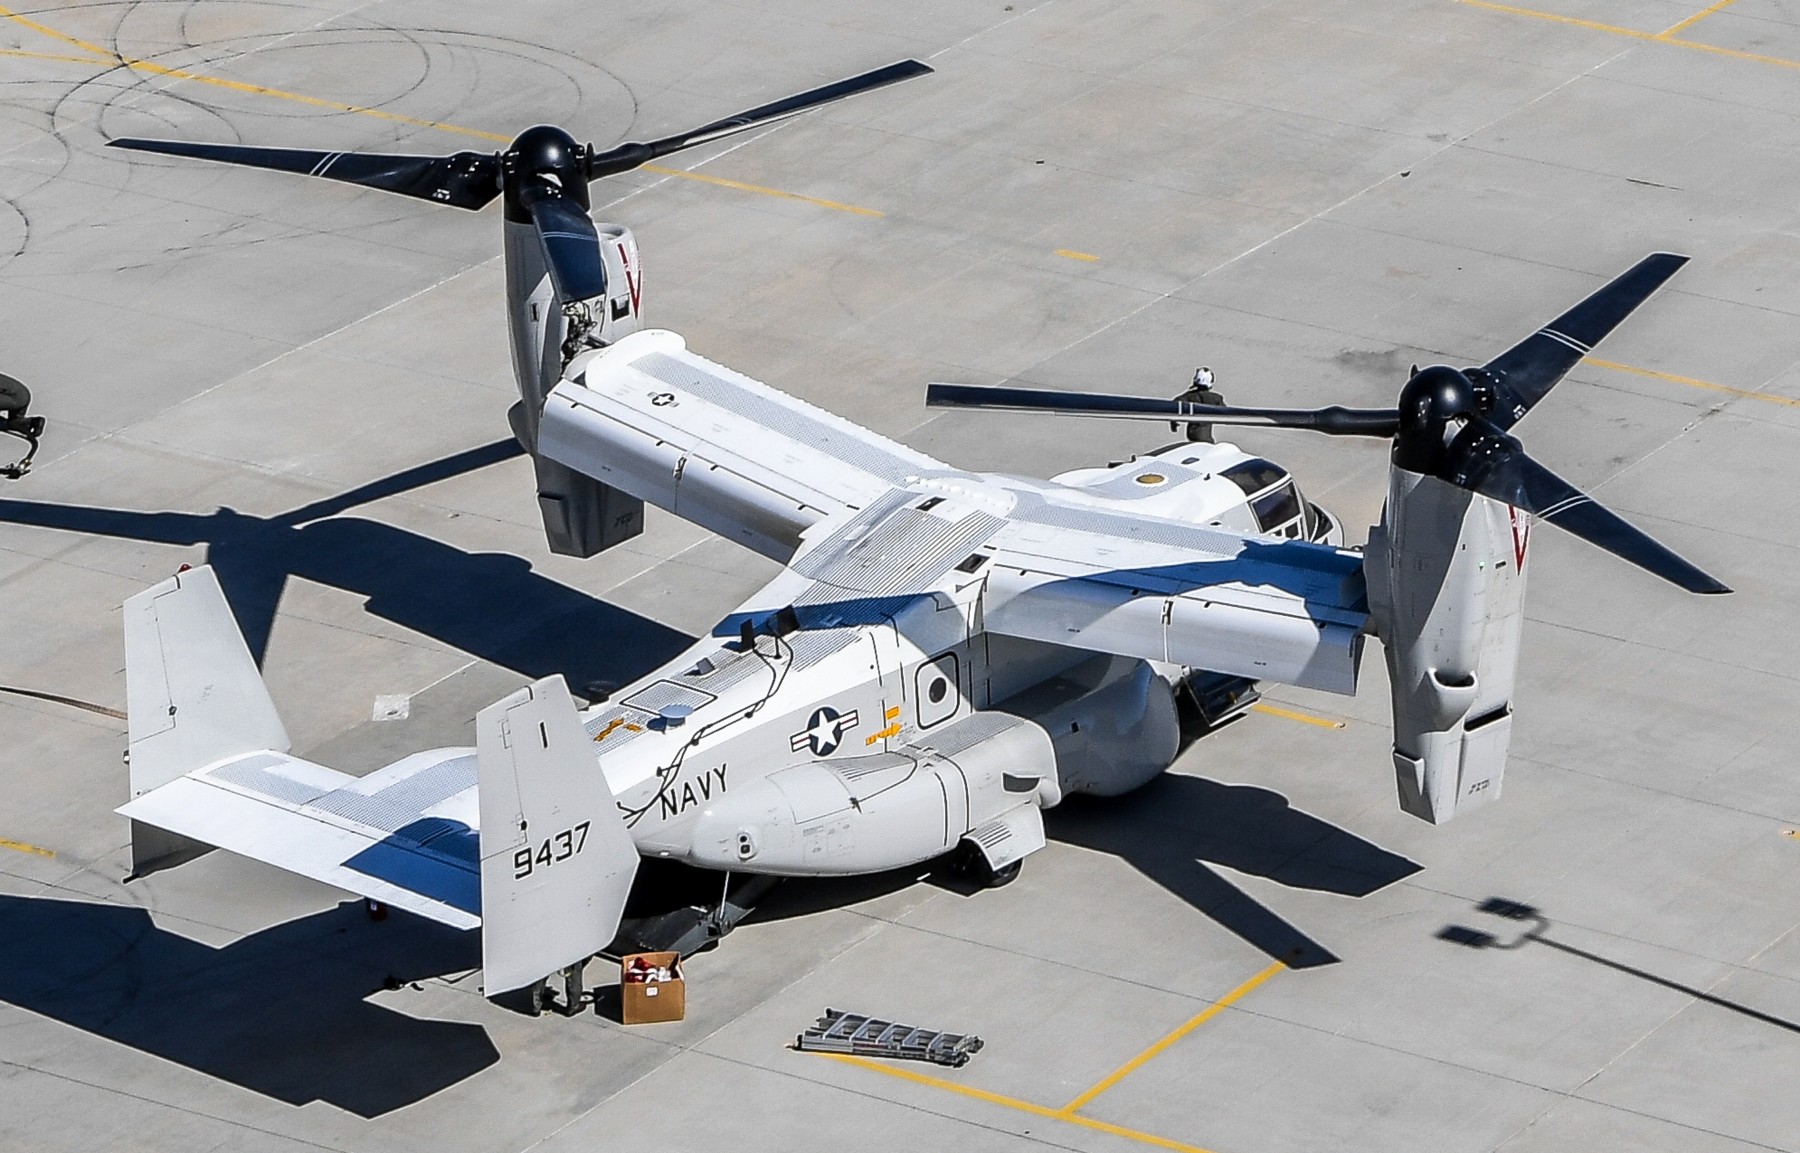 vrm-30 titans fleet logistics multi mission squadron us navy bell boeing cmv-22b osprey inyokern airport california 28